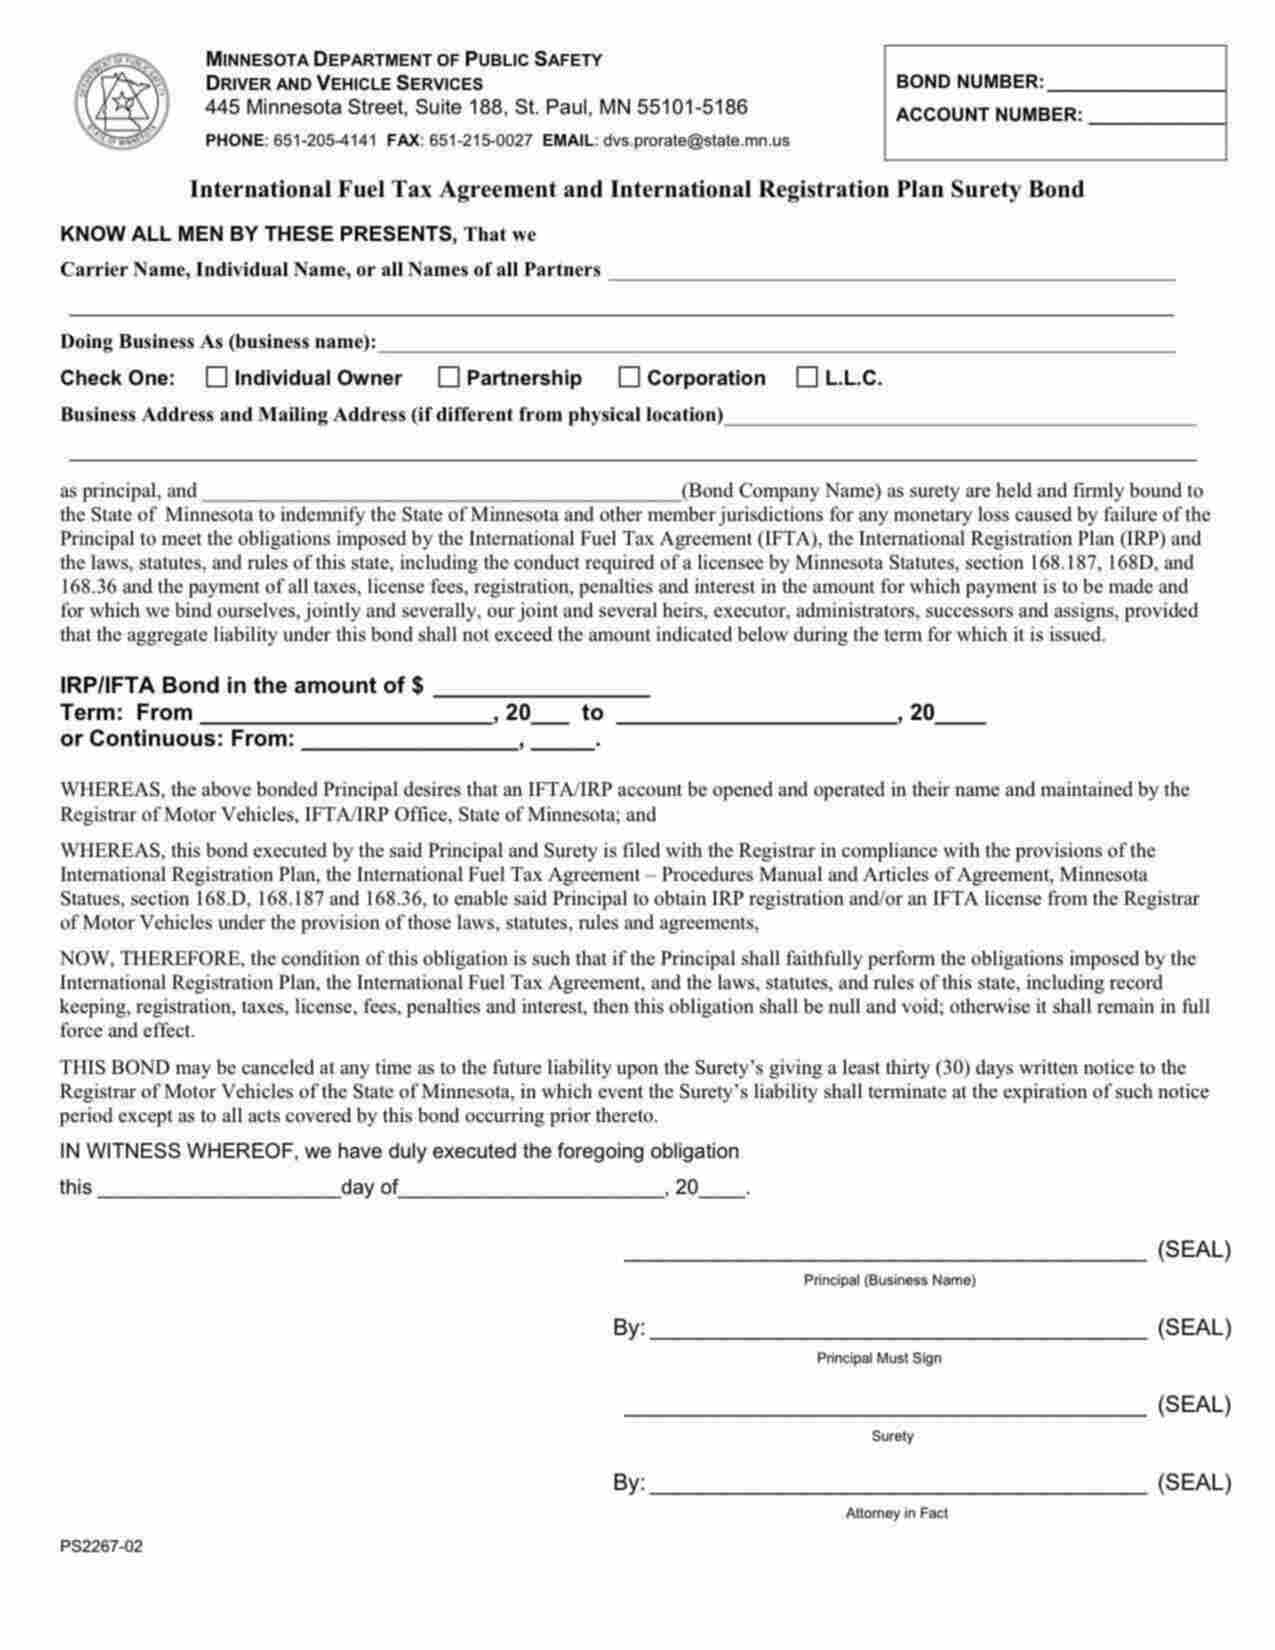 Minnesota International Fuel Tax Agreement (IFTA) and International Registration Plan (IRP) Bond Form